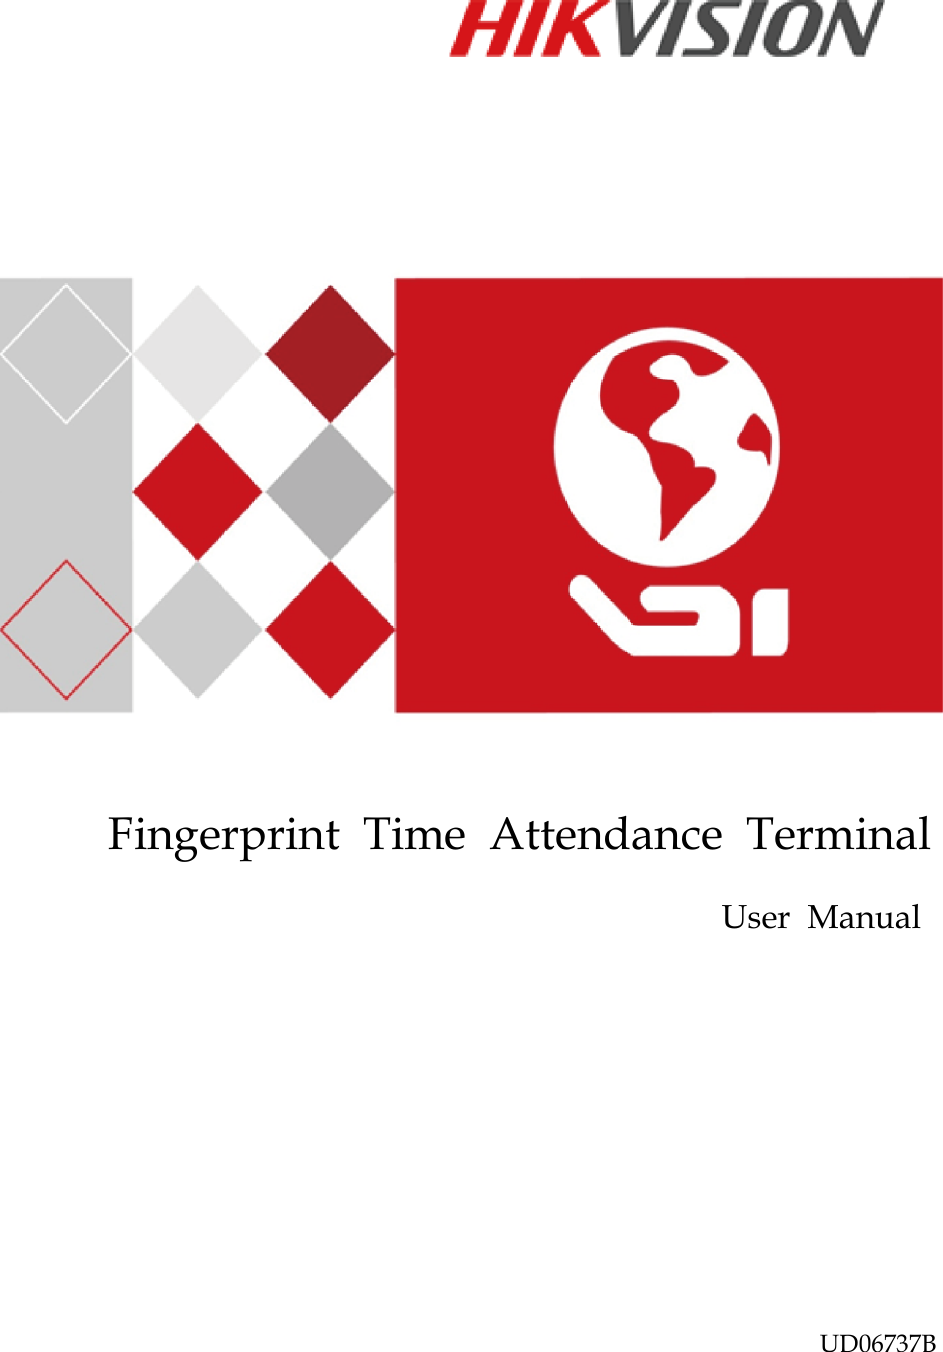                          Fingerprint  Time  Attendance  Terminal    User  Manual                       UD06737B   